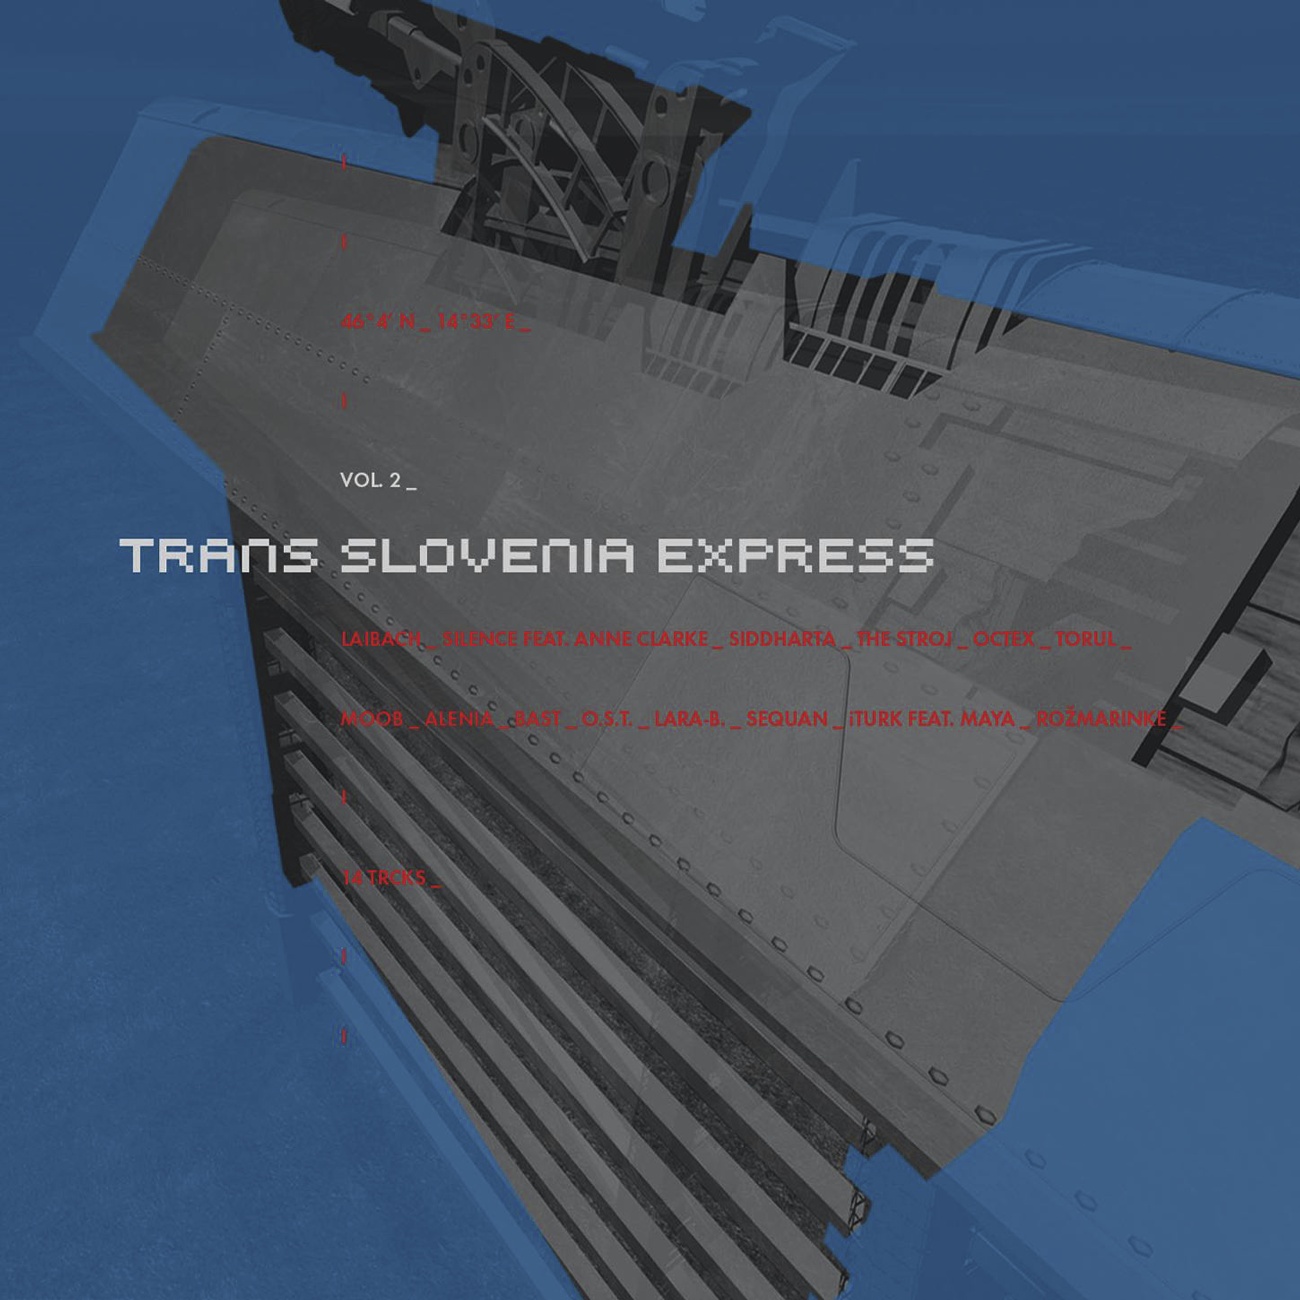 Trans Slovenia Express Volume 2